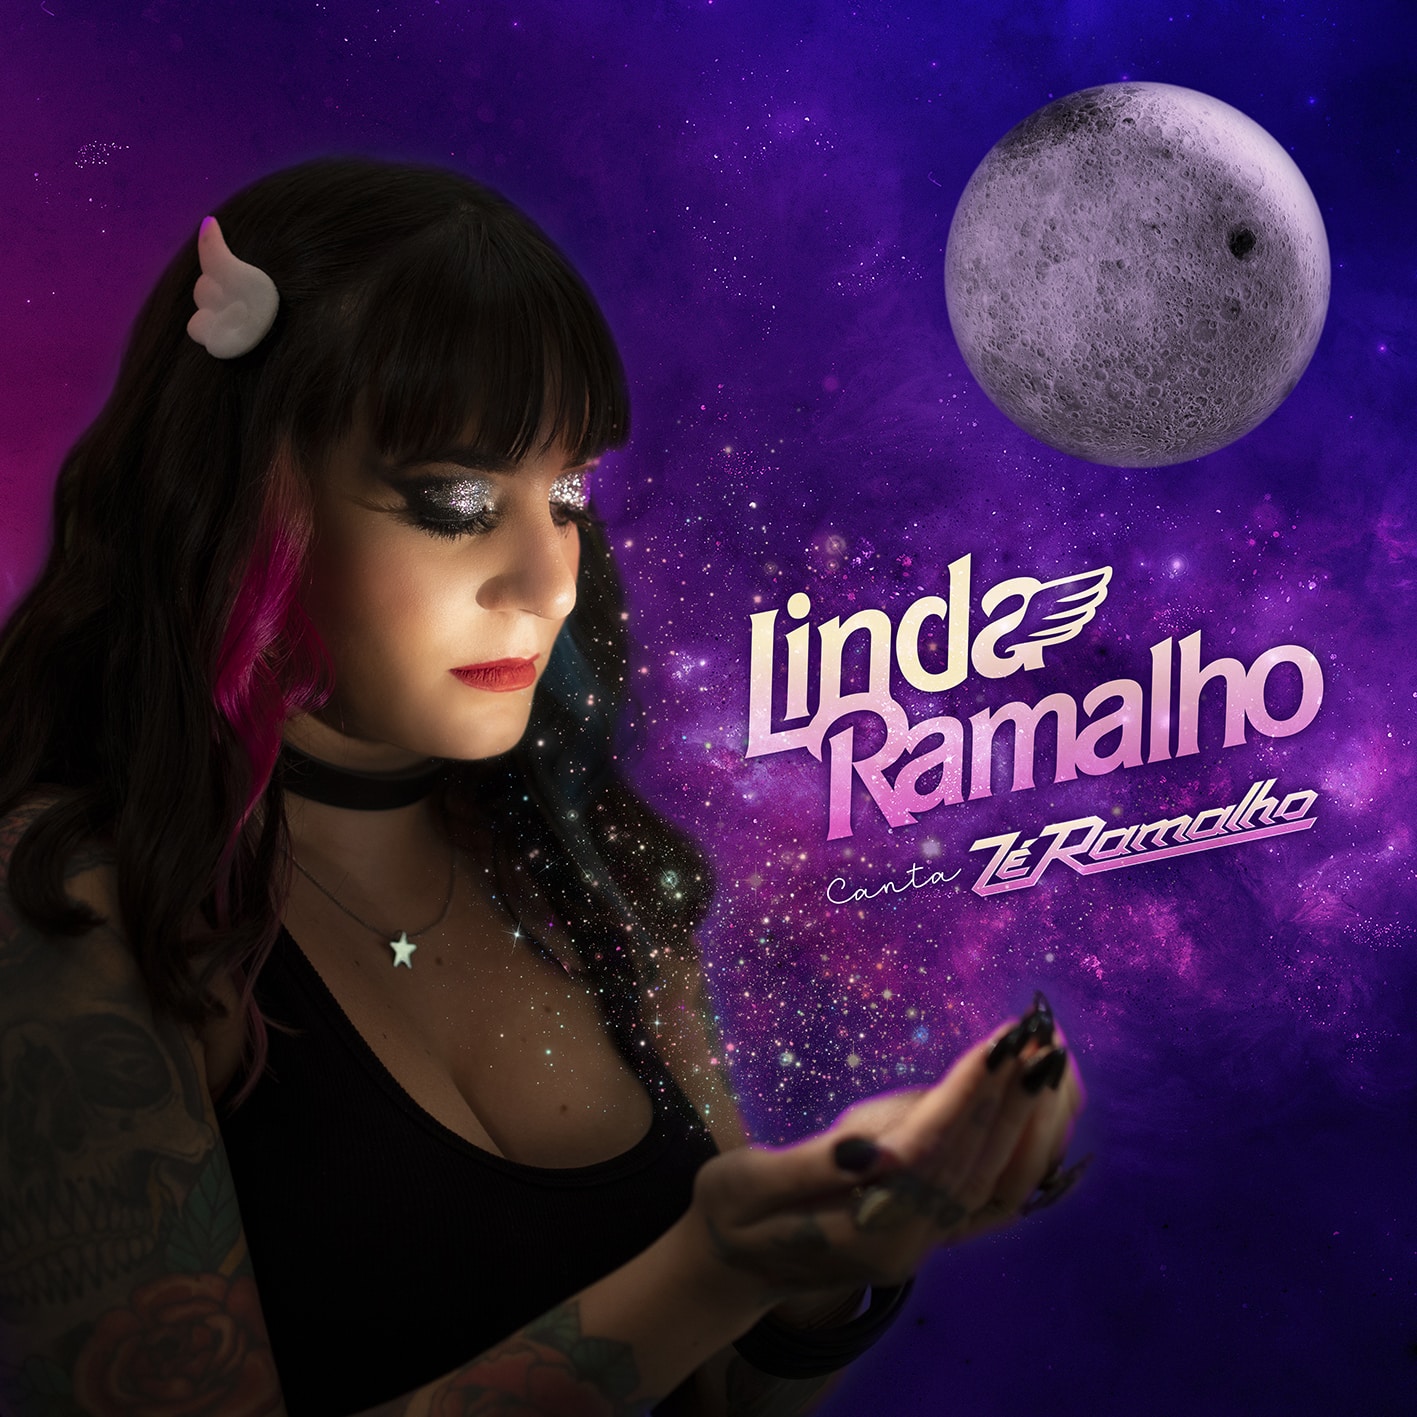 revistaprosaversoearte.com - Álbum 'Linda Ramalho canta Zé Ramalho'